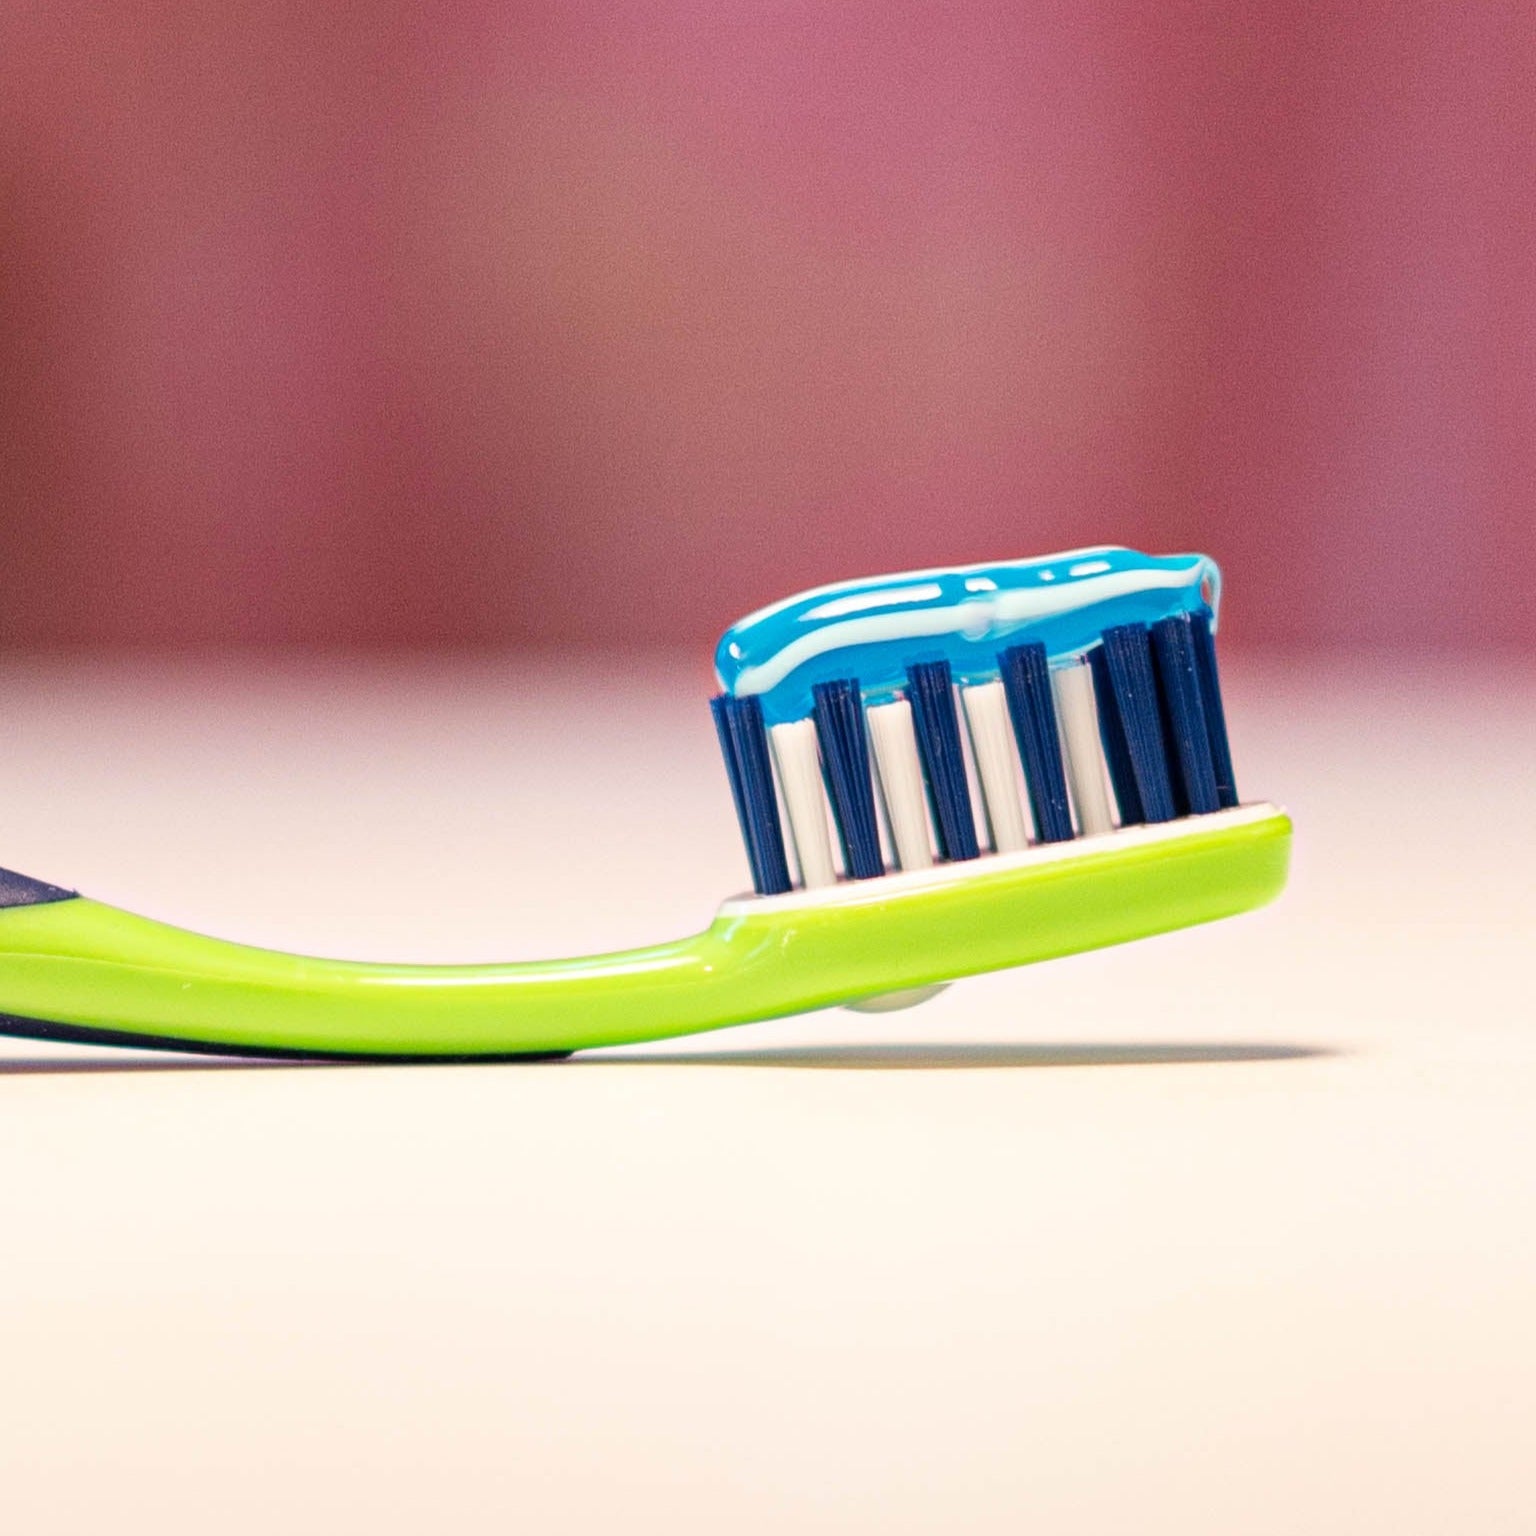 Eco Toothbrush Nylon Medium (Assorted Colours)